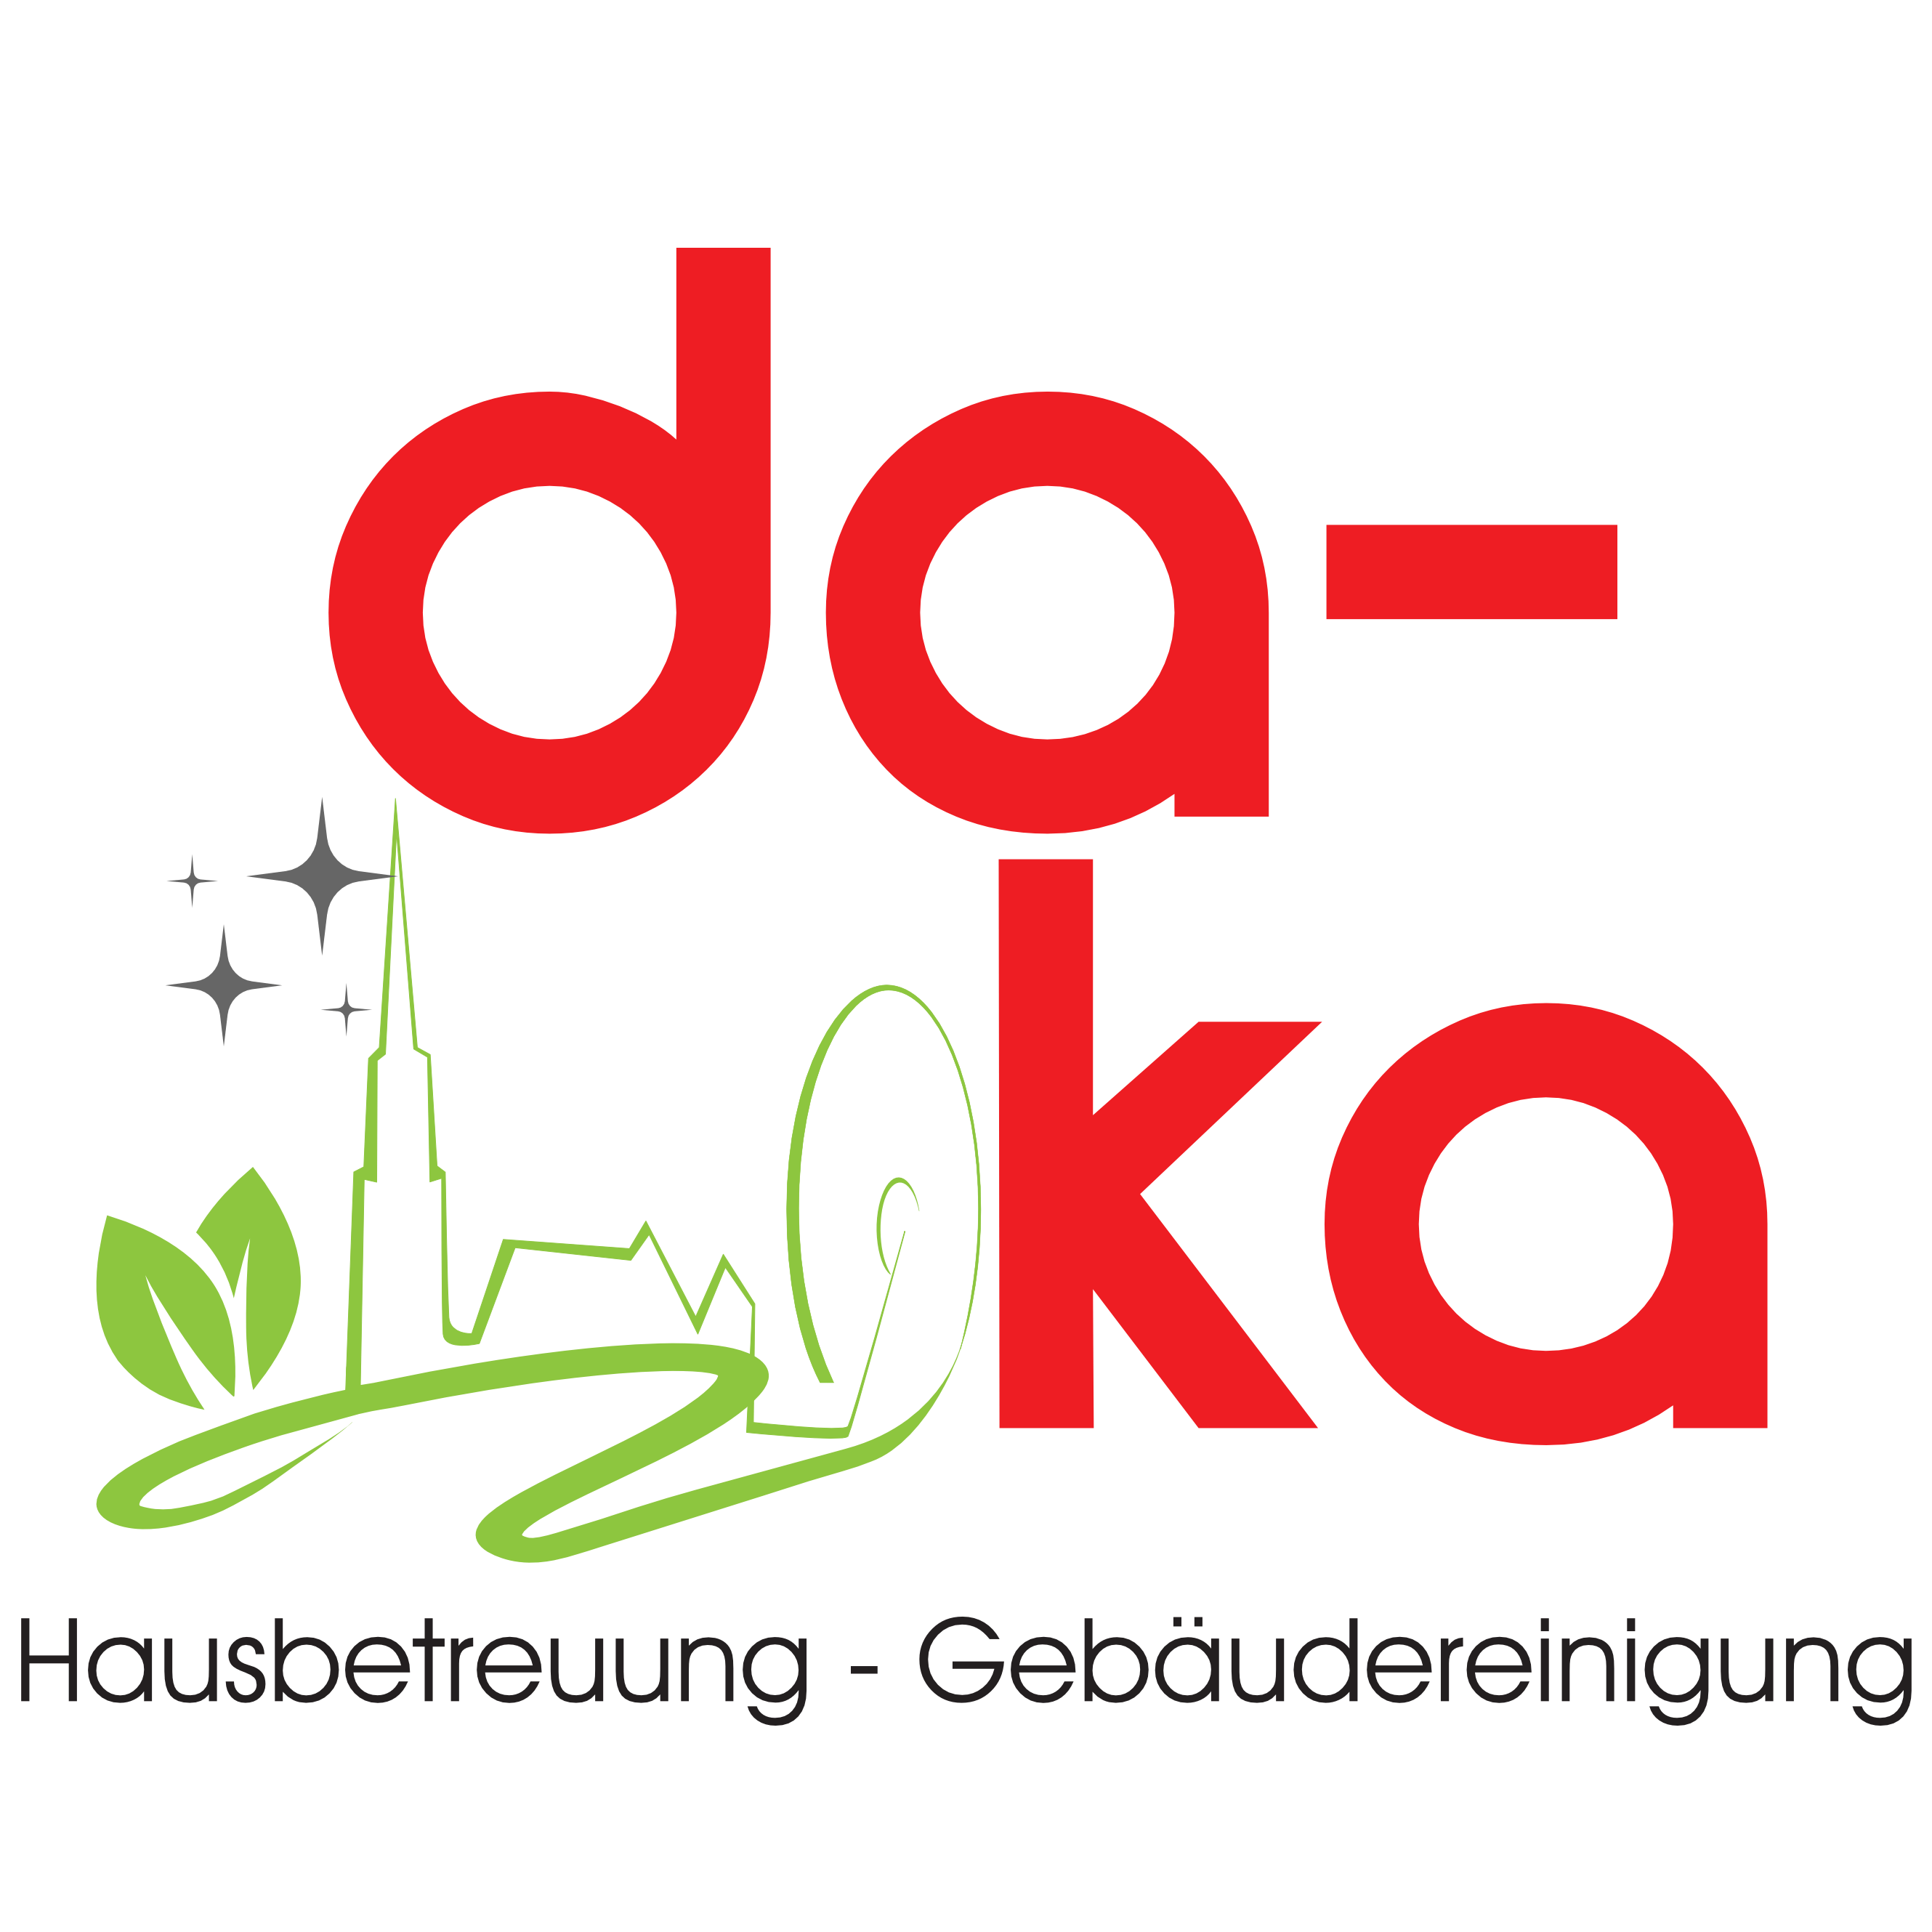 da-ka hausbetreuung GmbH Logo